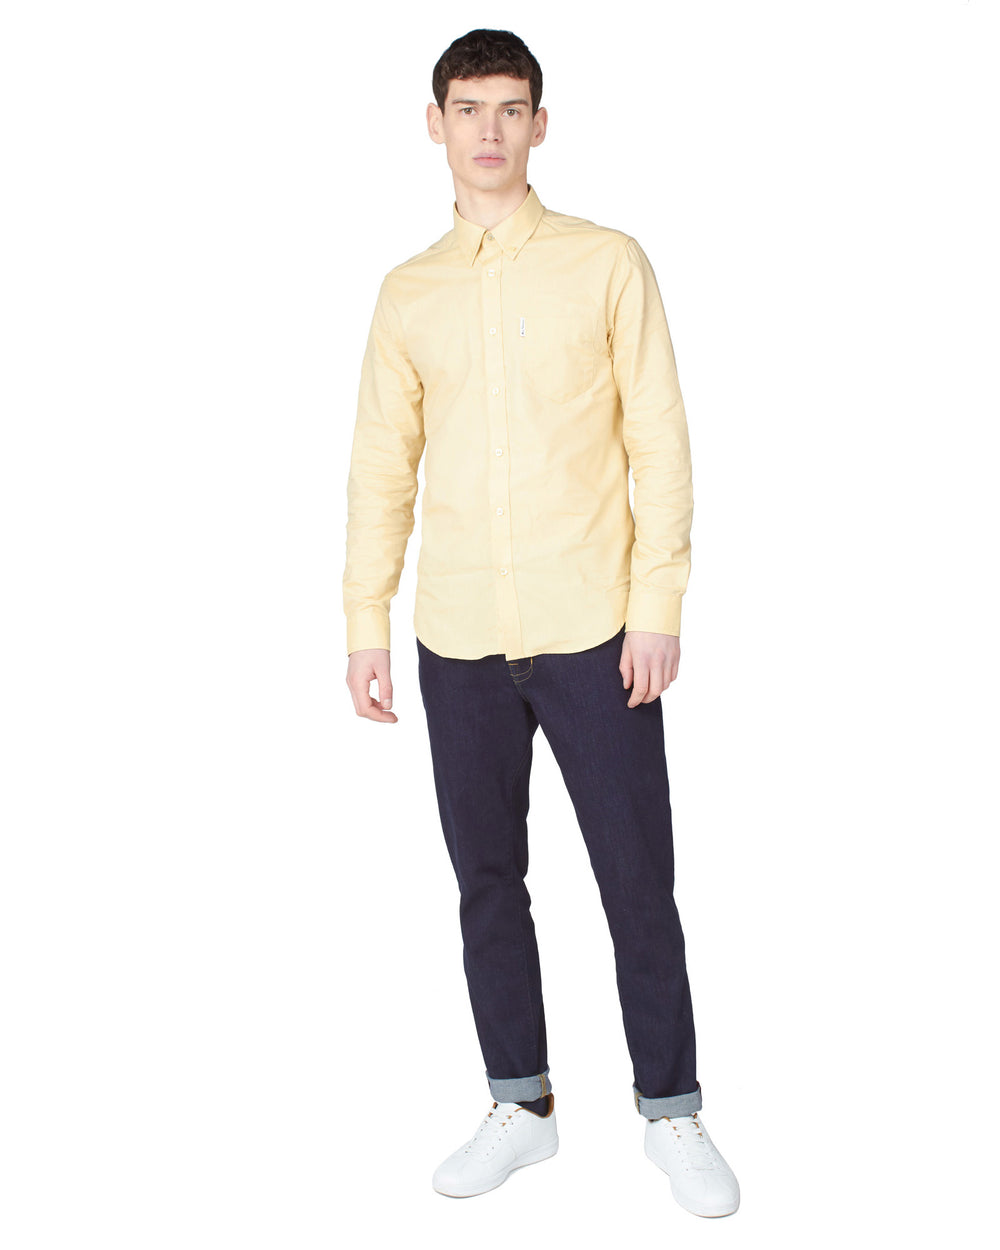 Long-Sleeve Signature Oxford Shirt - Pale Yellow